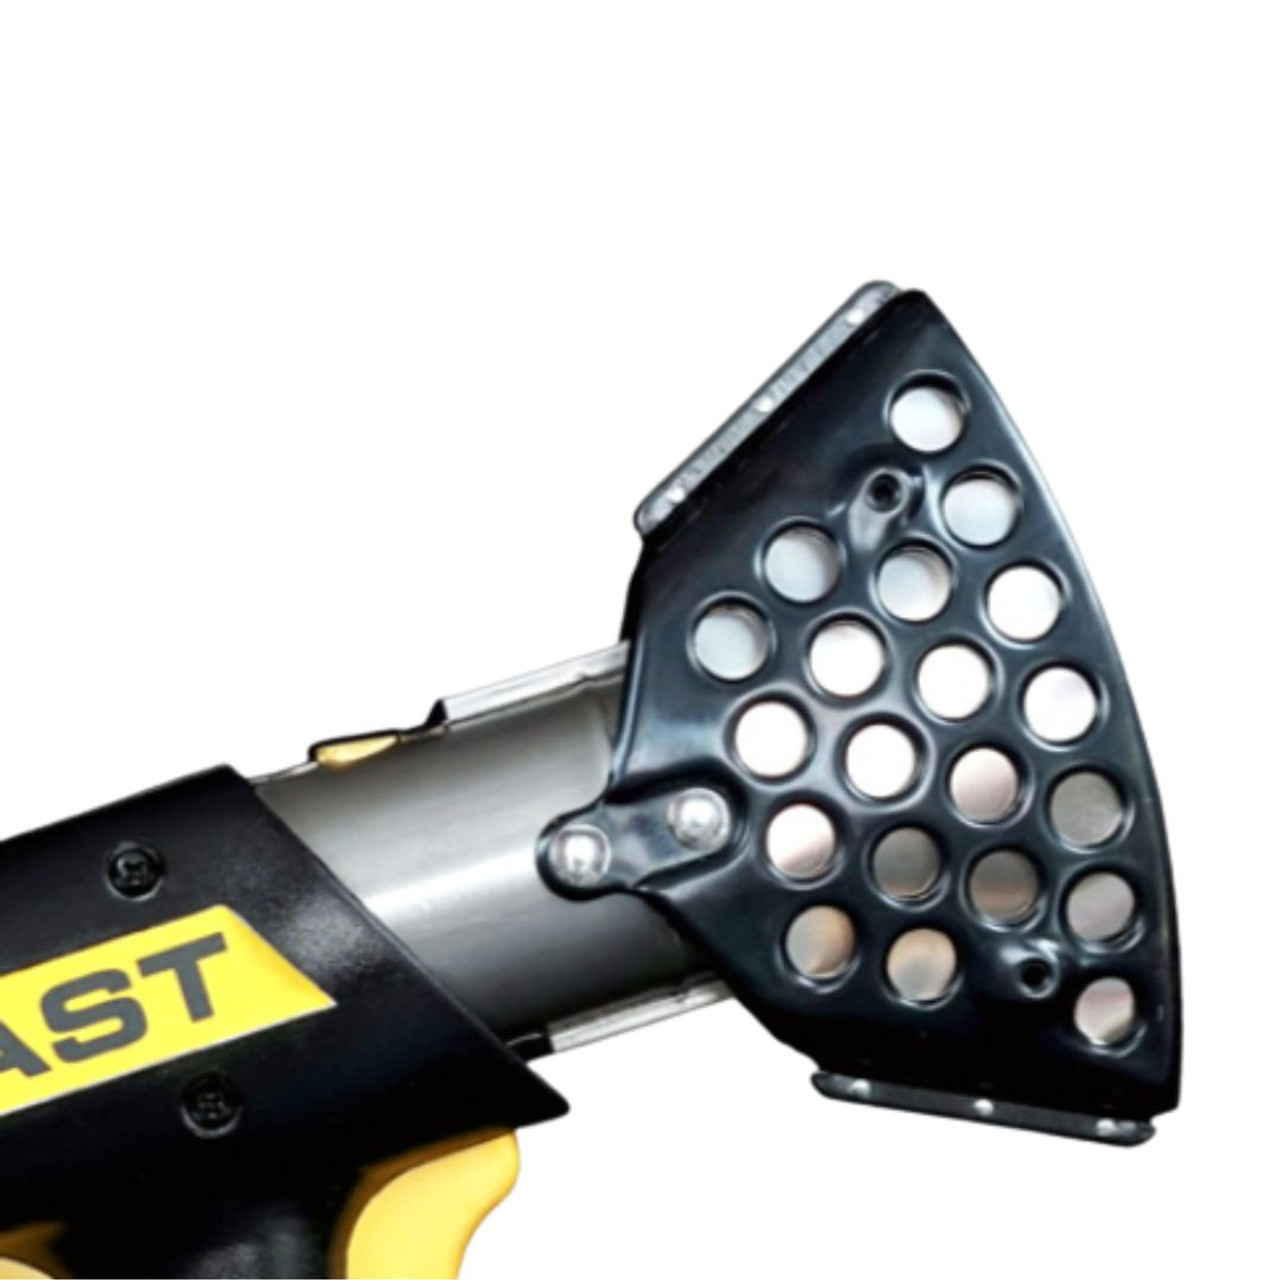 Shrinkfast 998 Rapid Shrink Wrap Fast Heat Gun Tool Kit Case